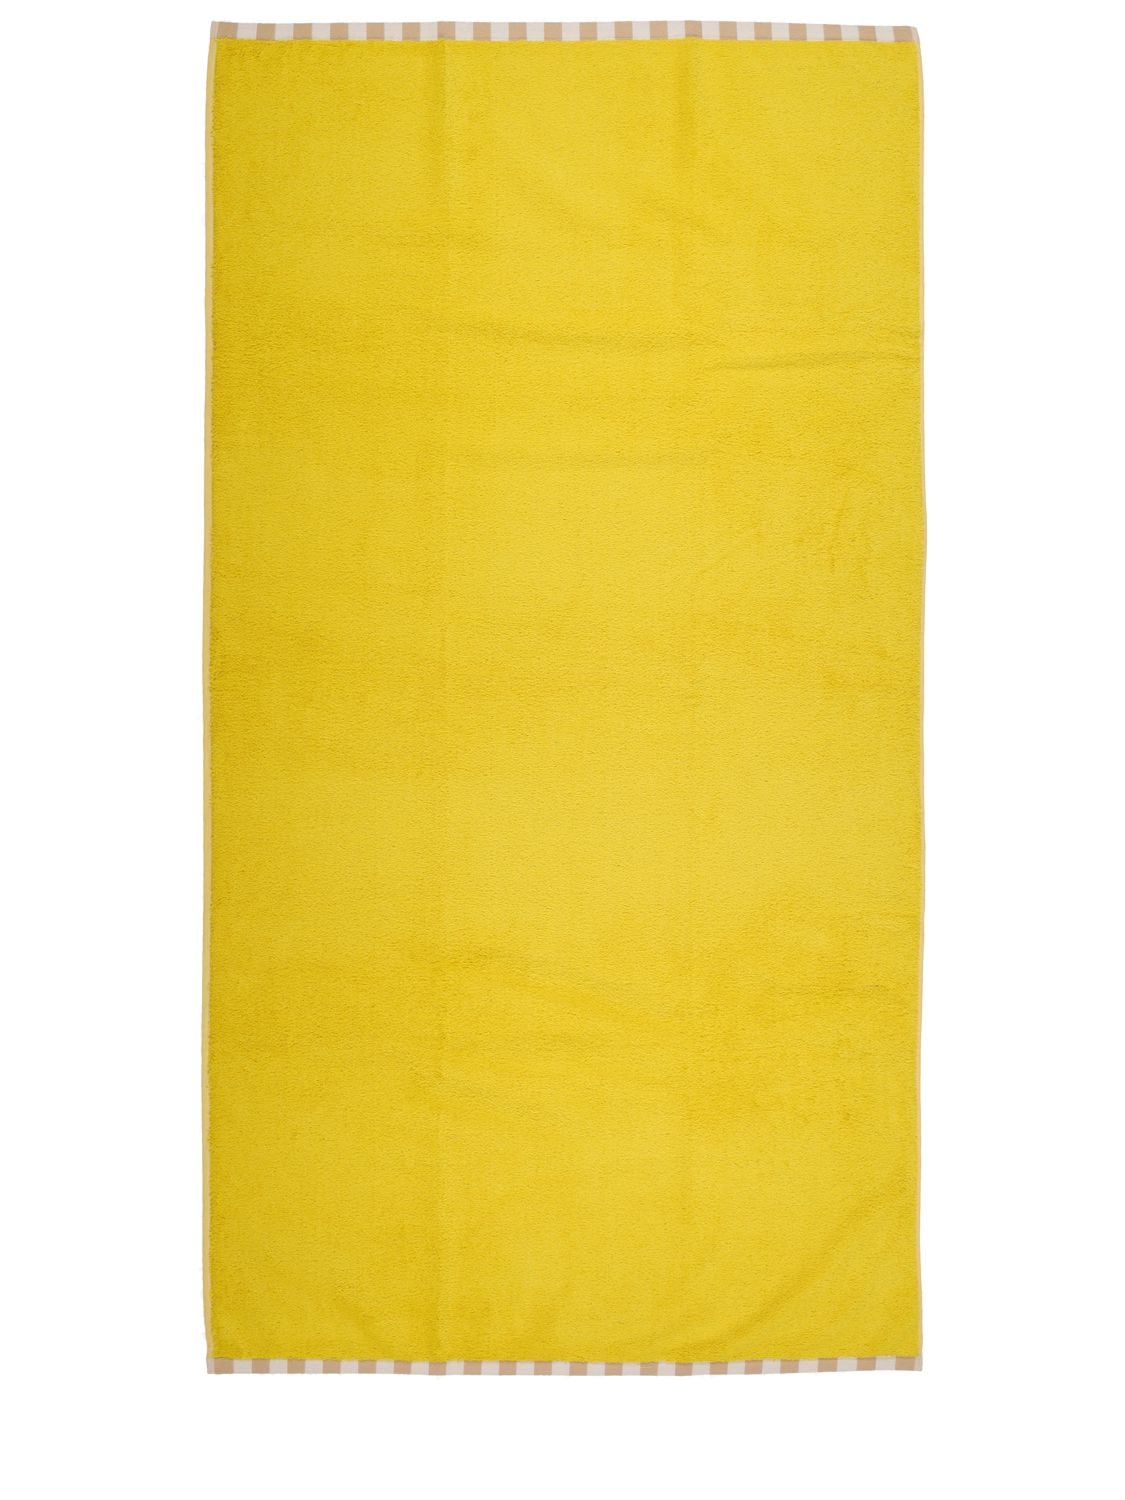 Image of Yellow Cornflower Cotton Bath Towel